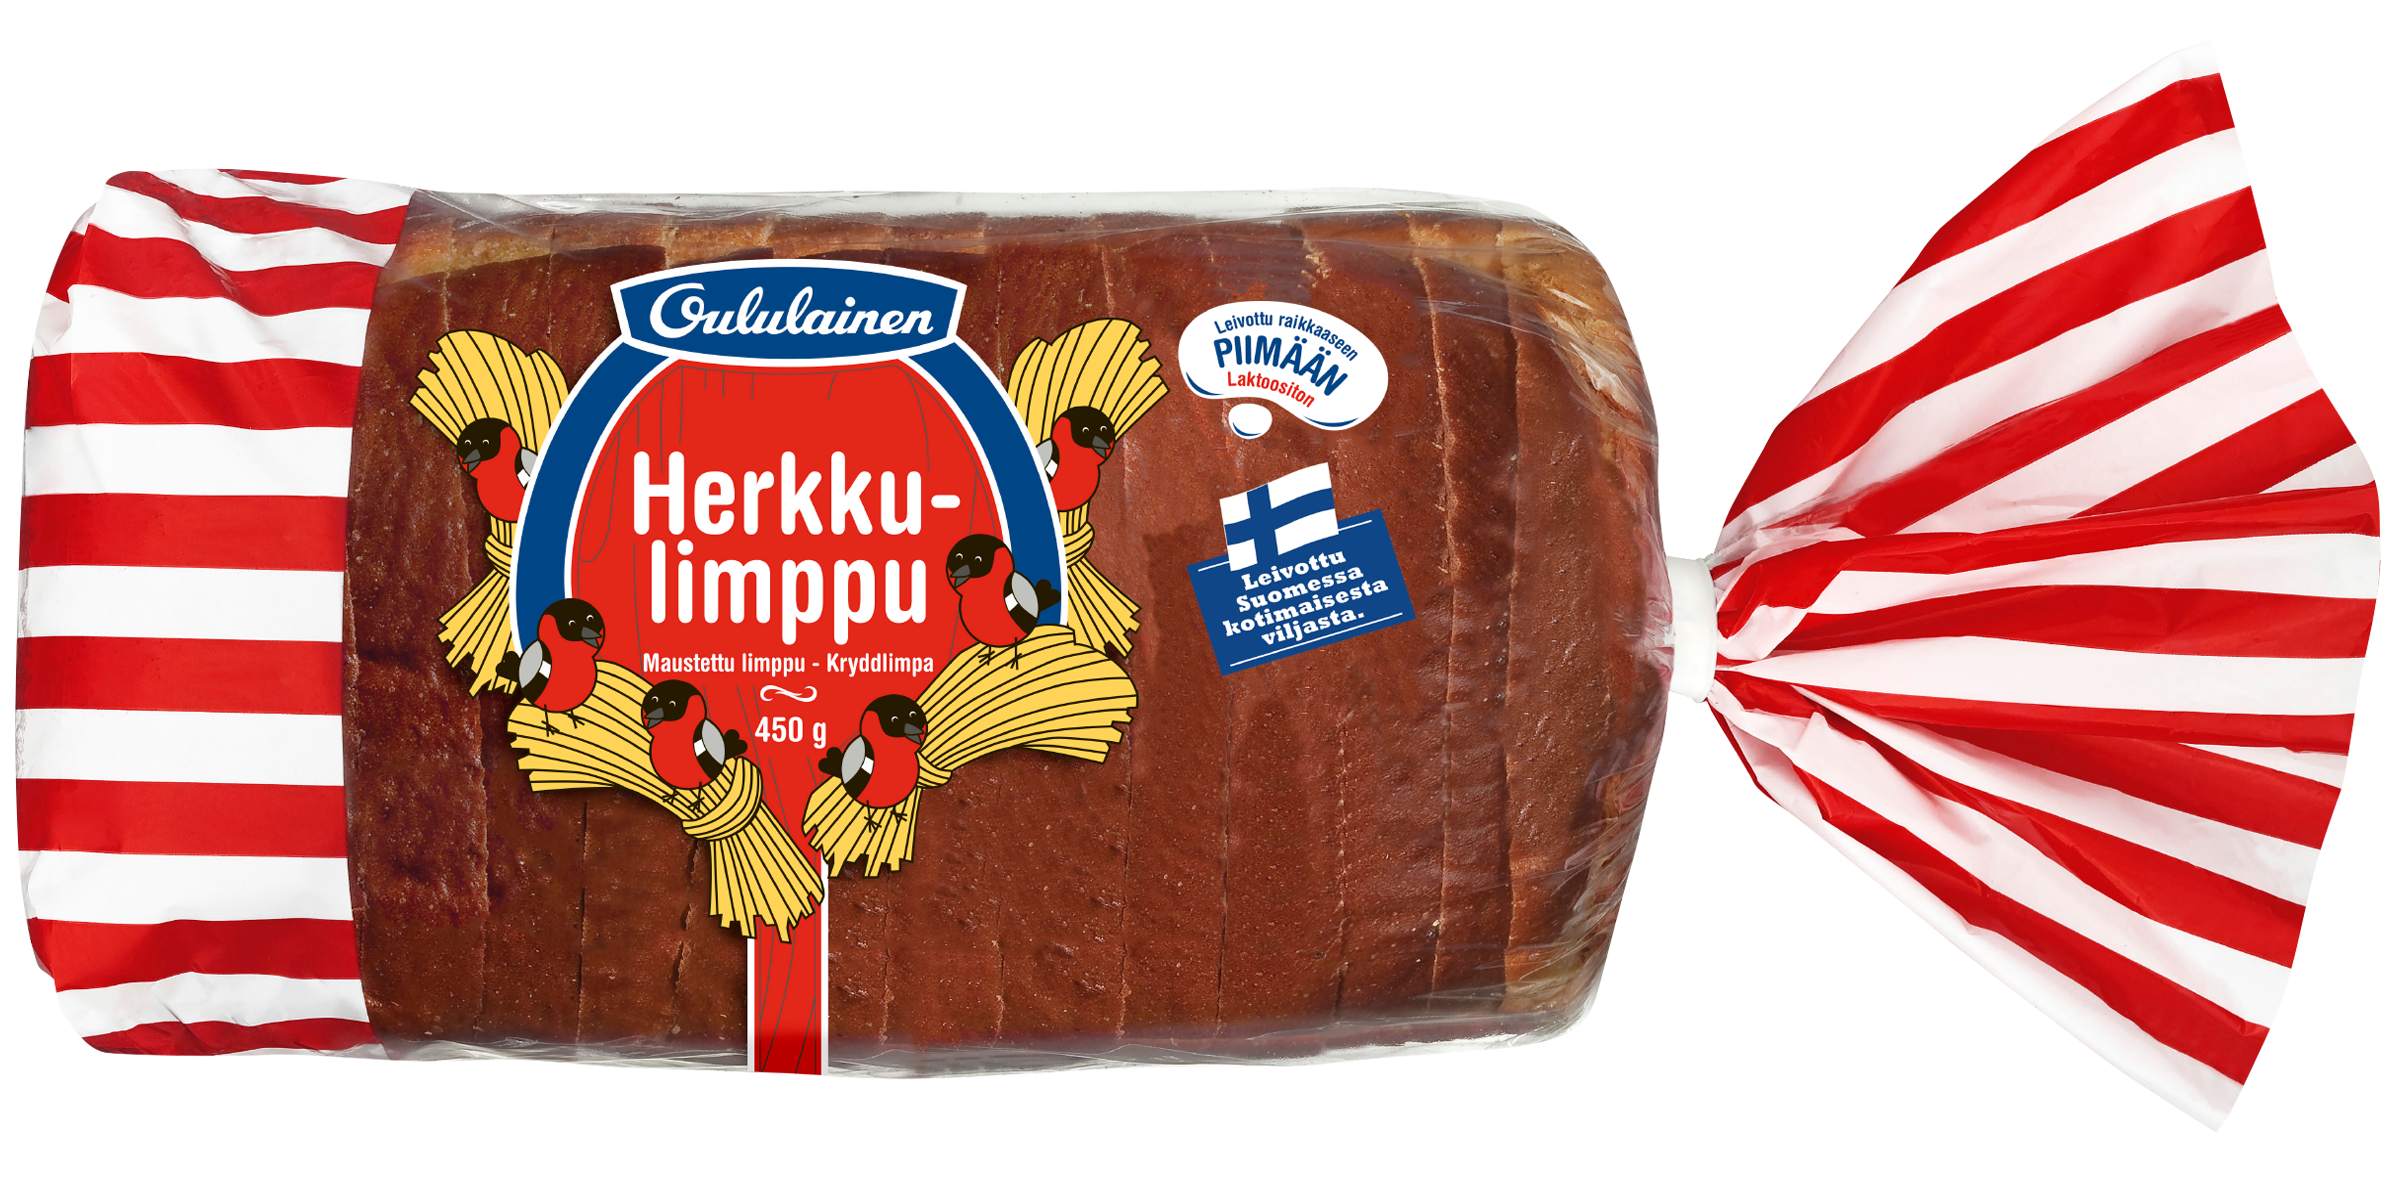 Oululainen Äitimuorin Herkkulimppu 450g, flavoured loaf